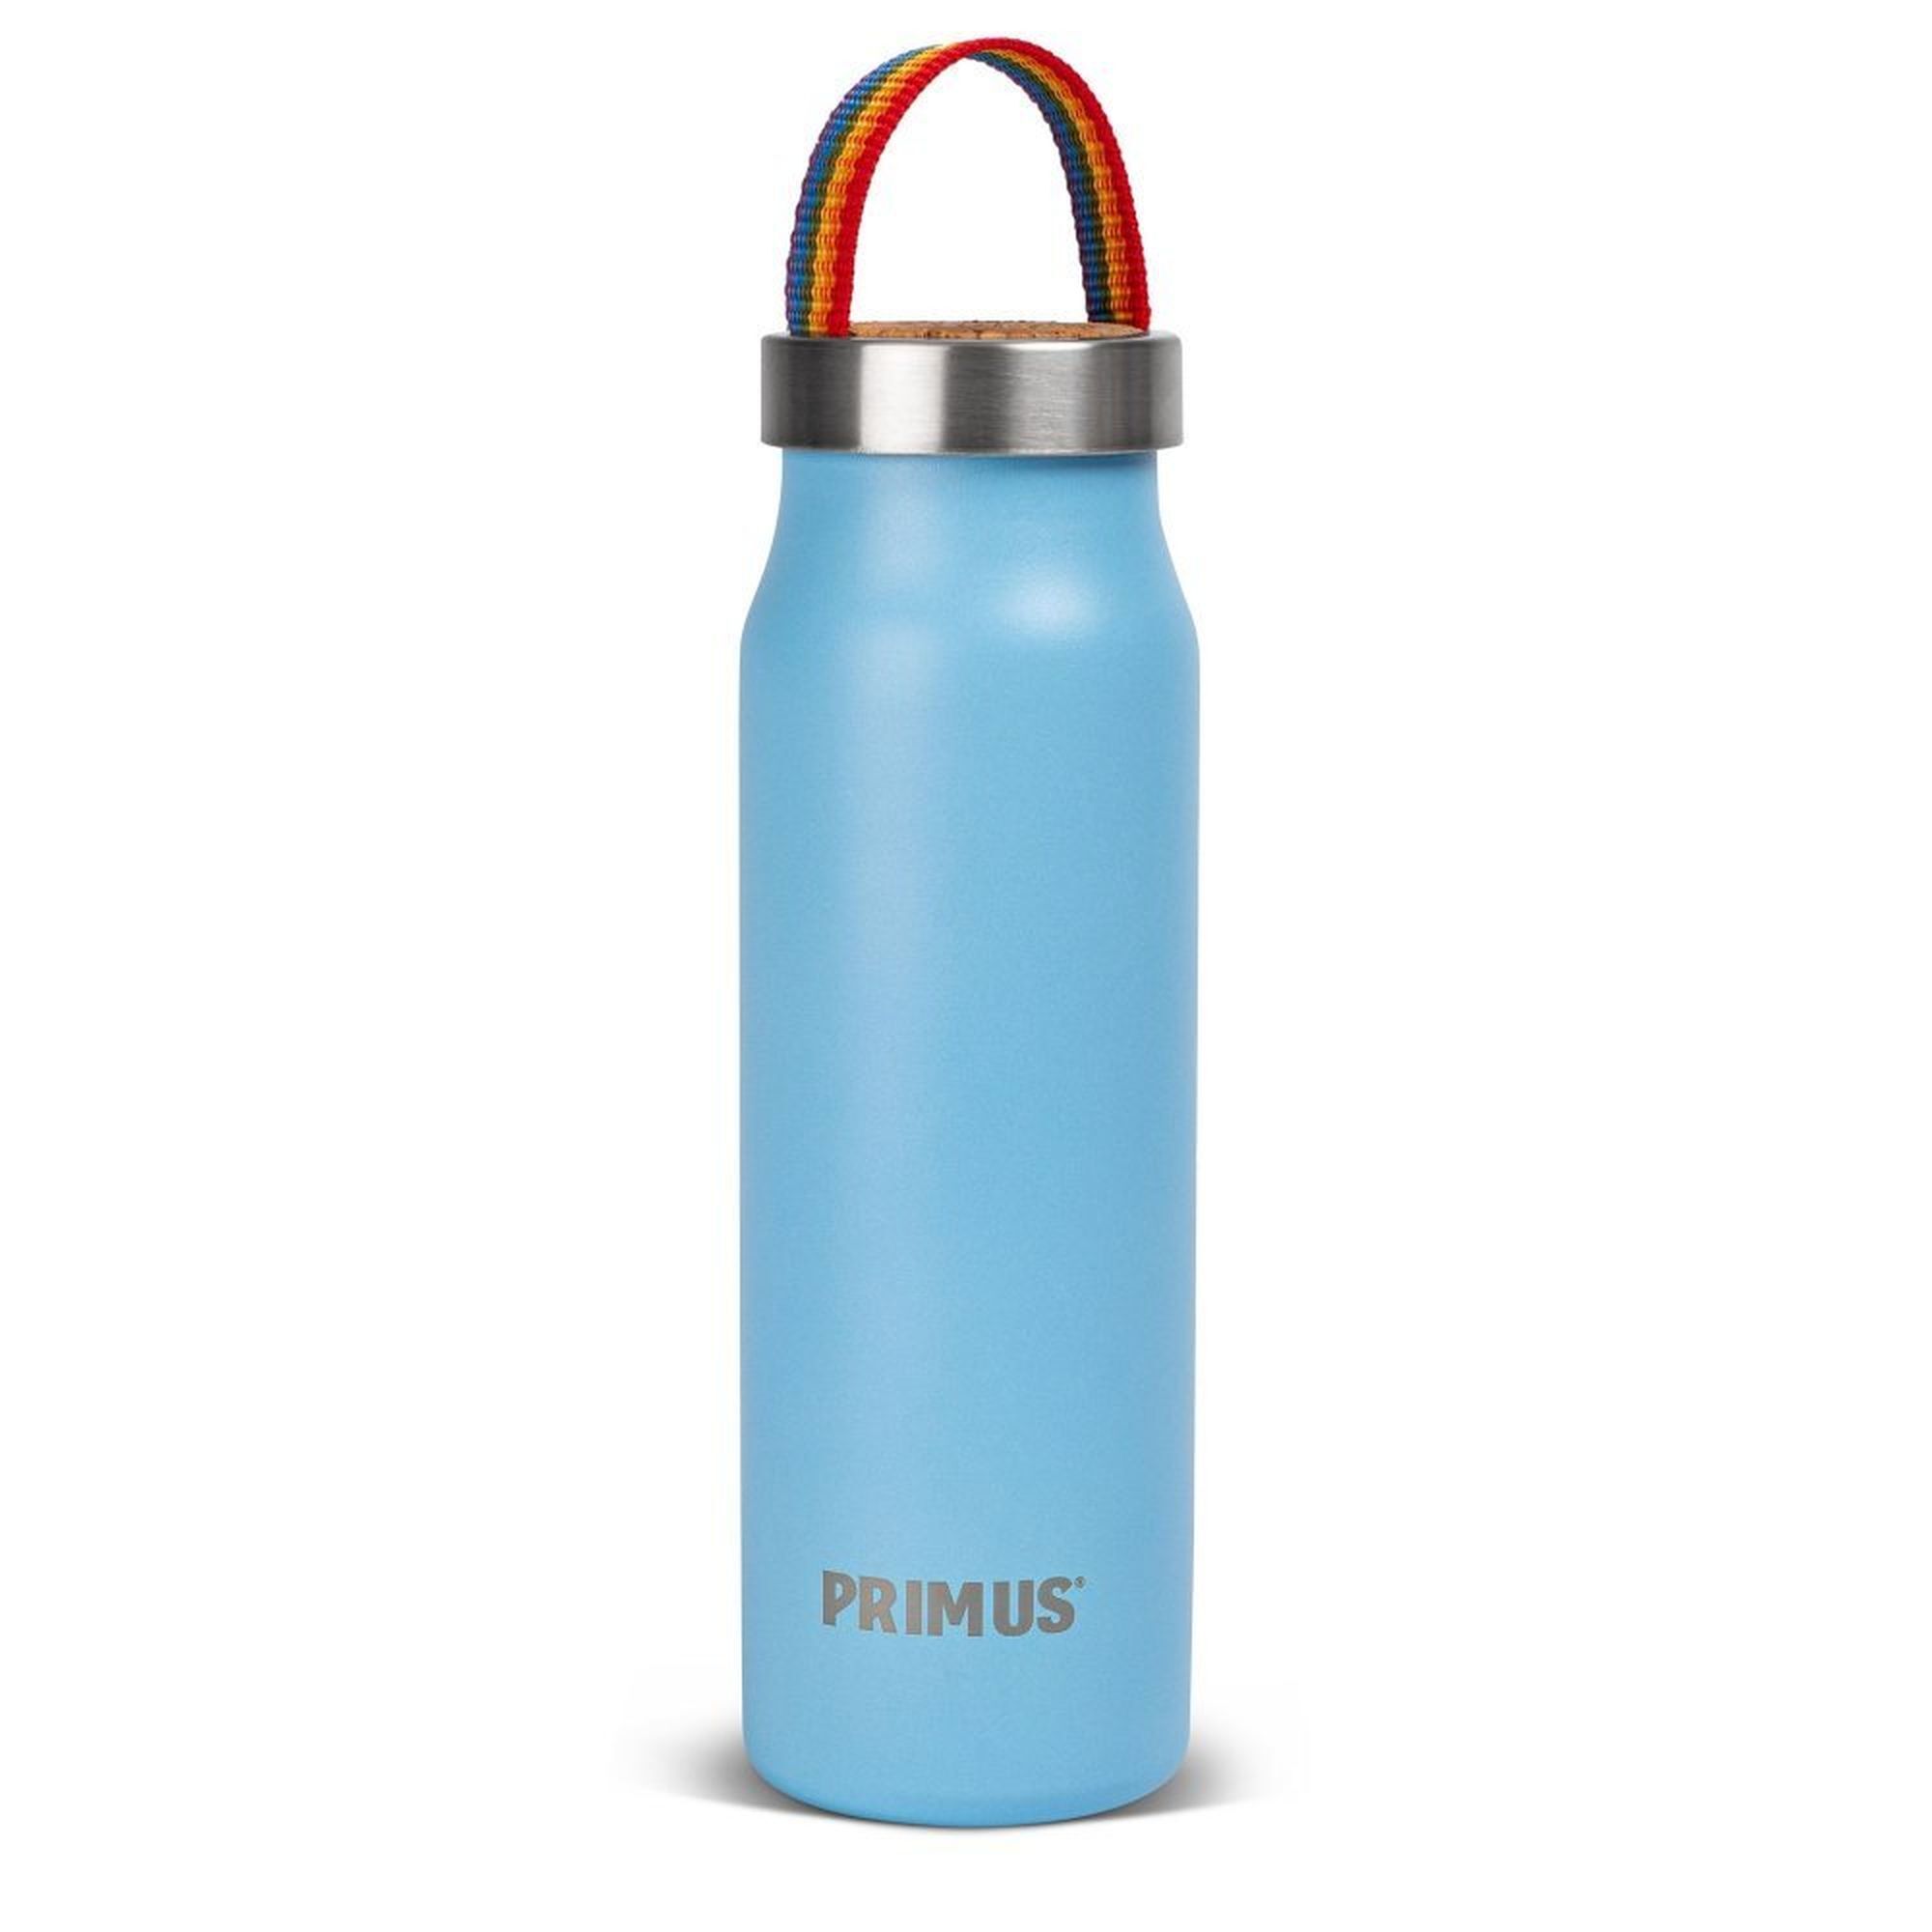 Primus Klunken Vacuum Bottle 0.5L - Botella térmica